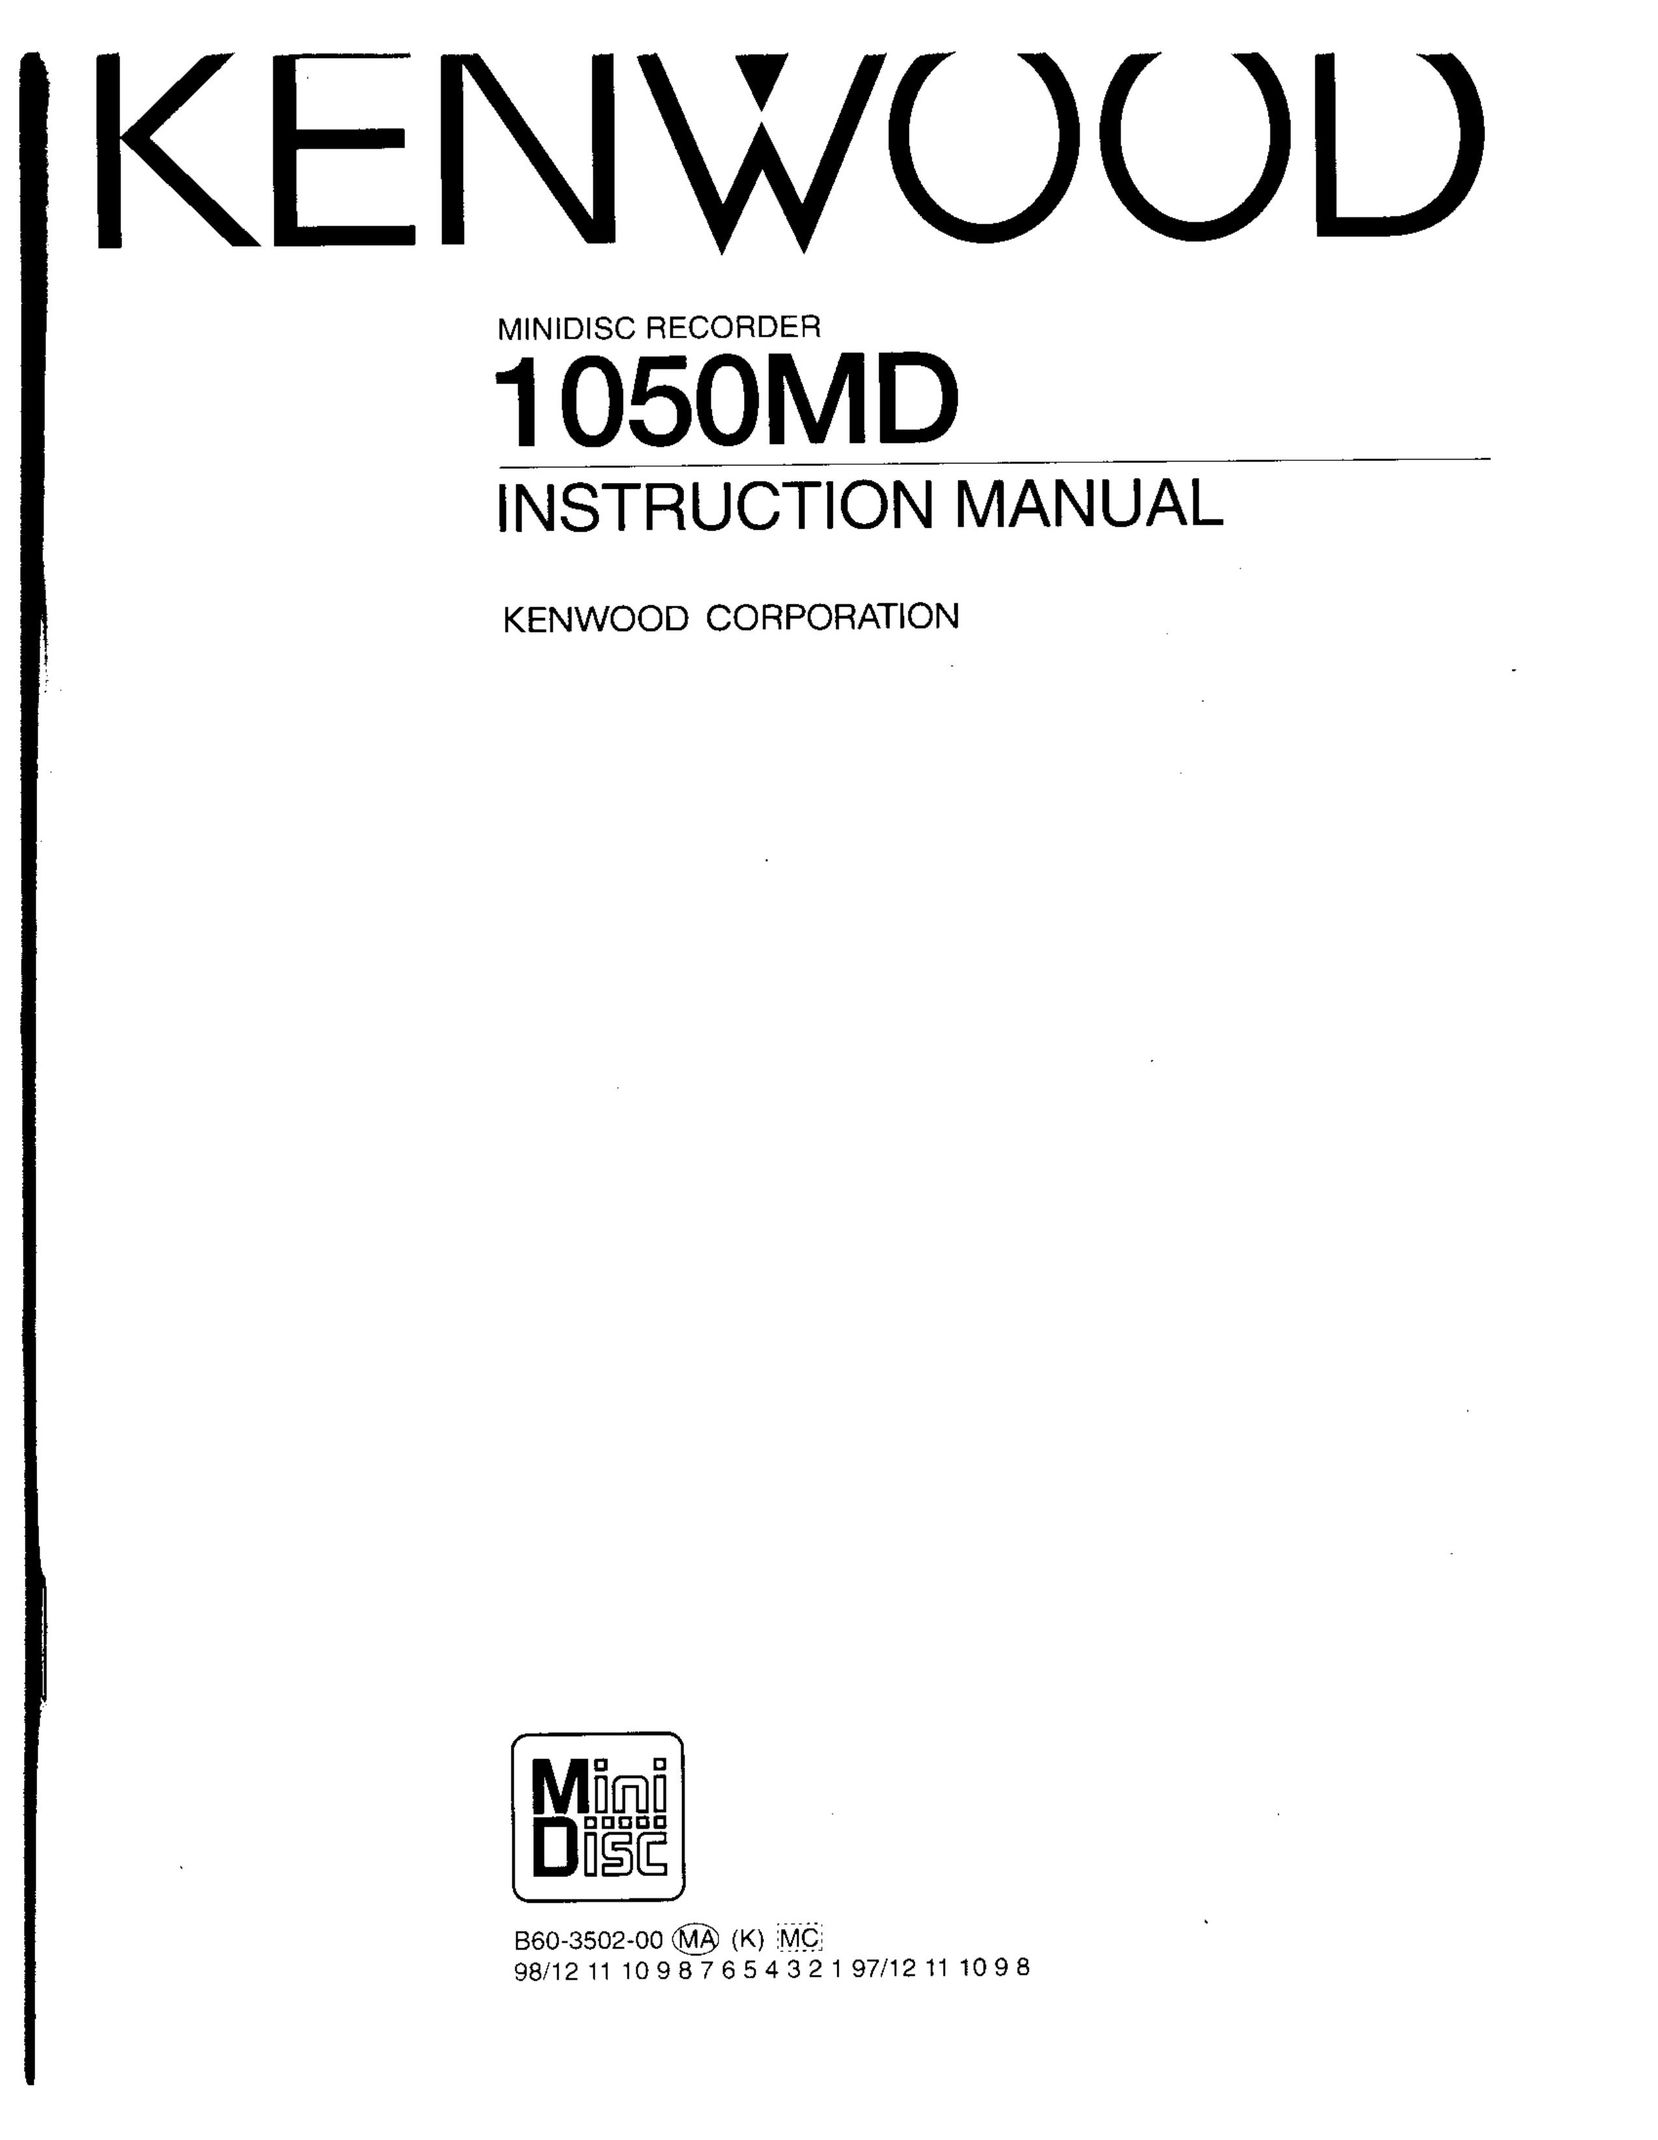 Kenwood BJV180Z MiniDisc Player User Manual